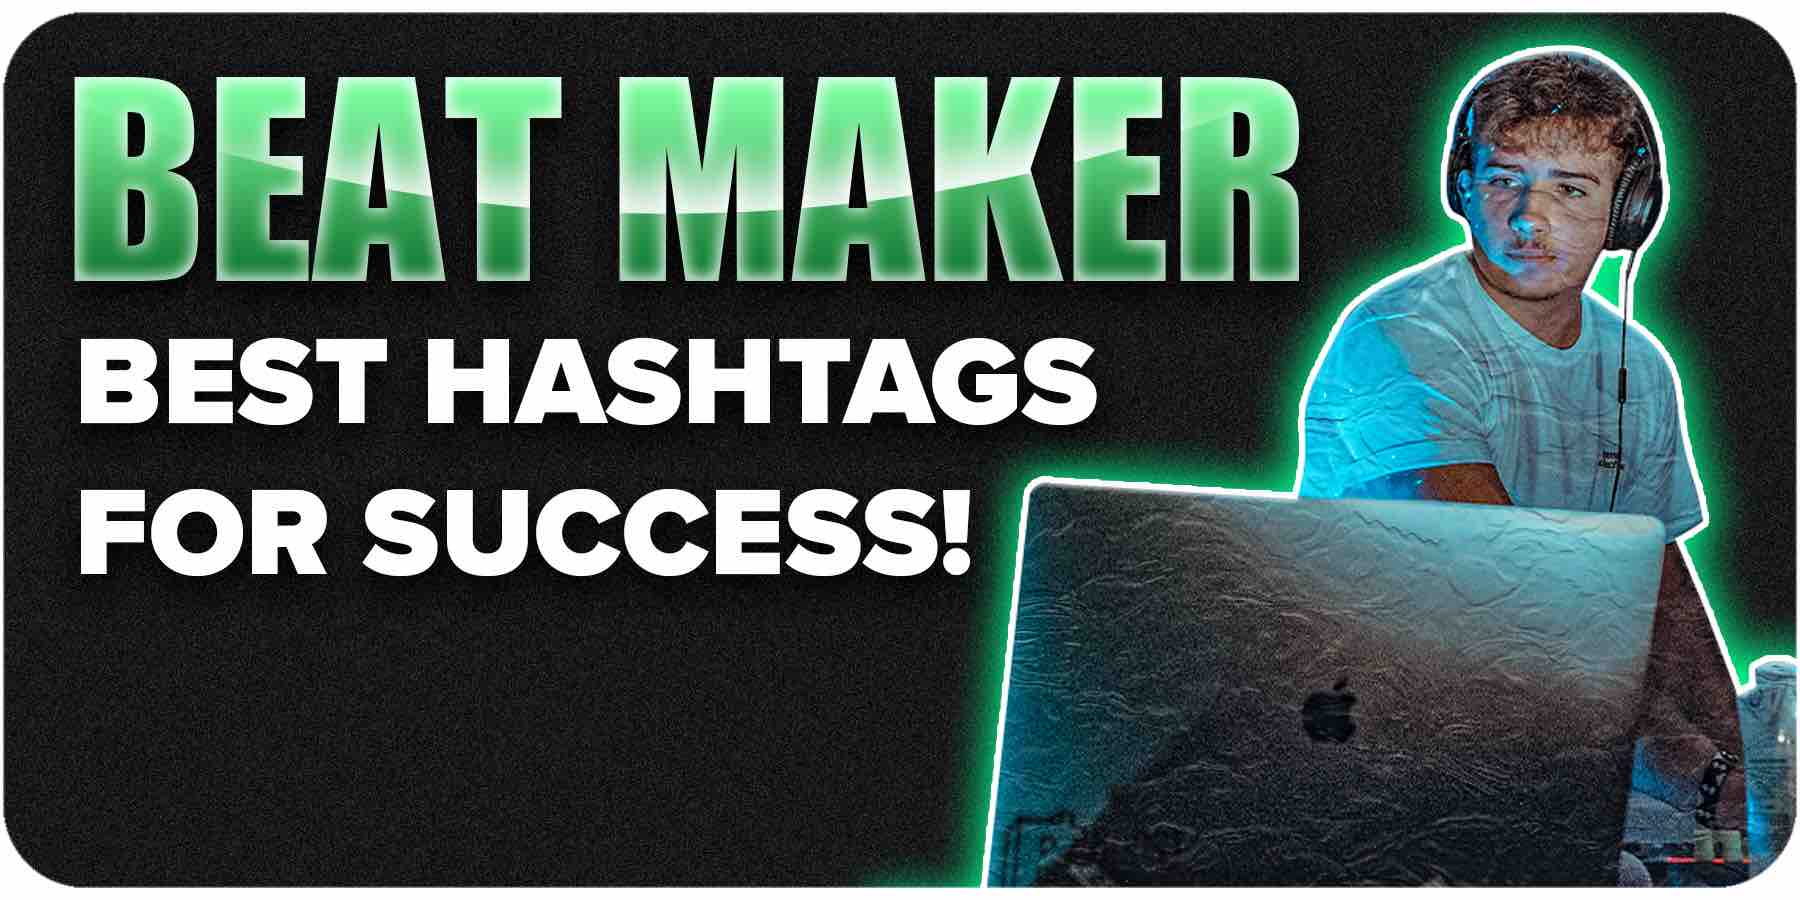 Beatmaker hashtag success